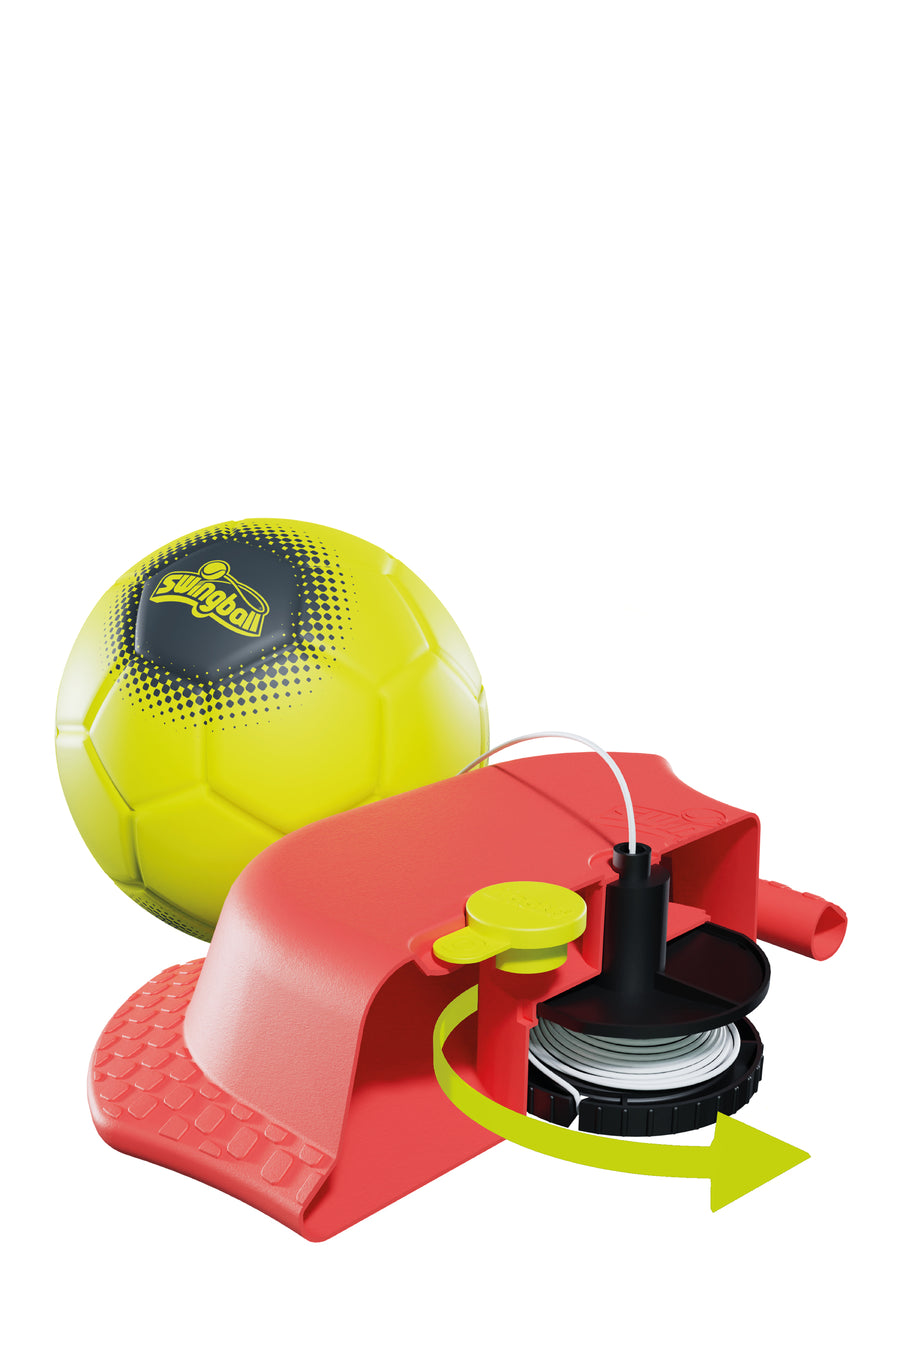 Swingball reflex soccer